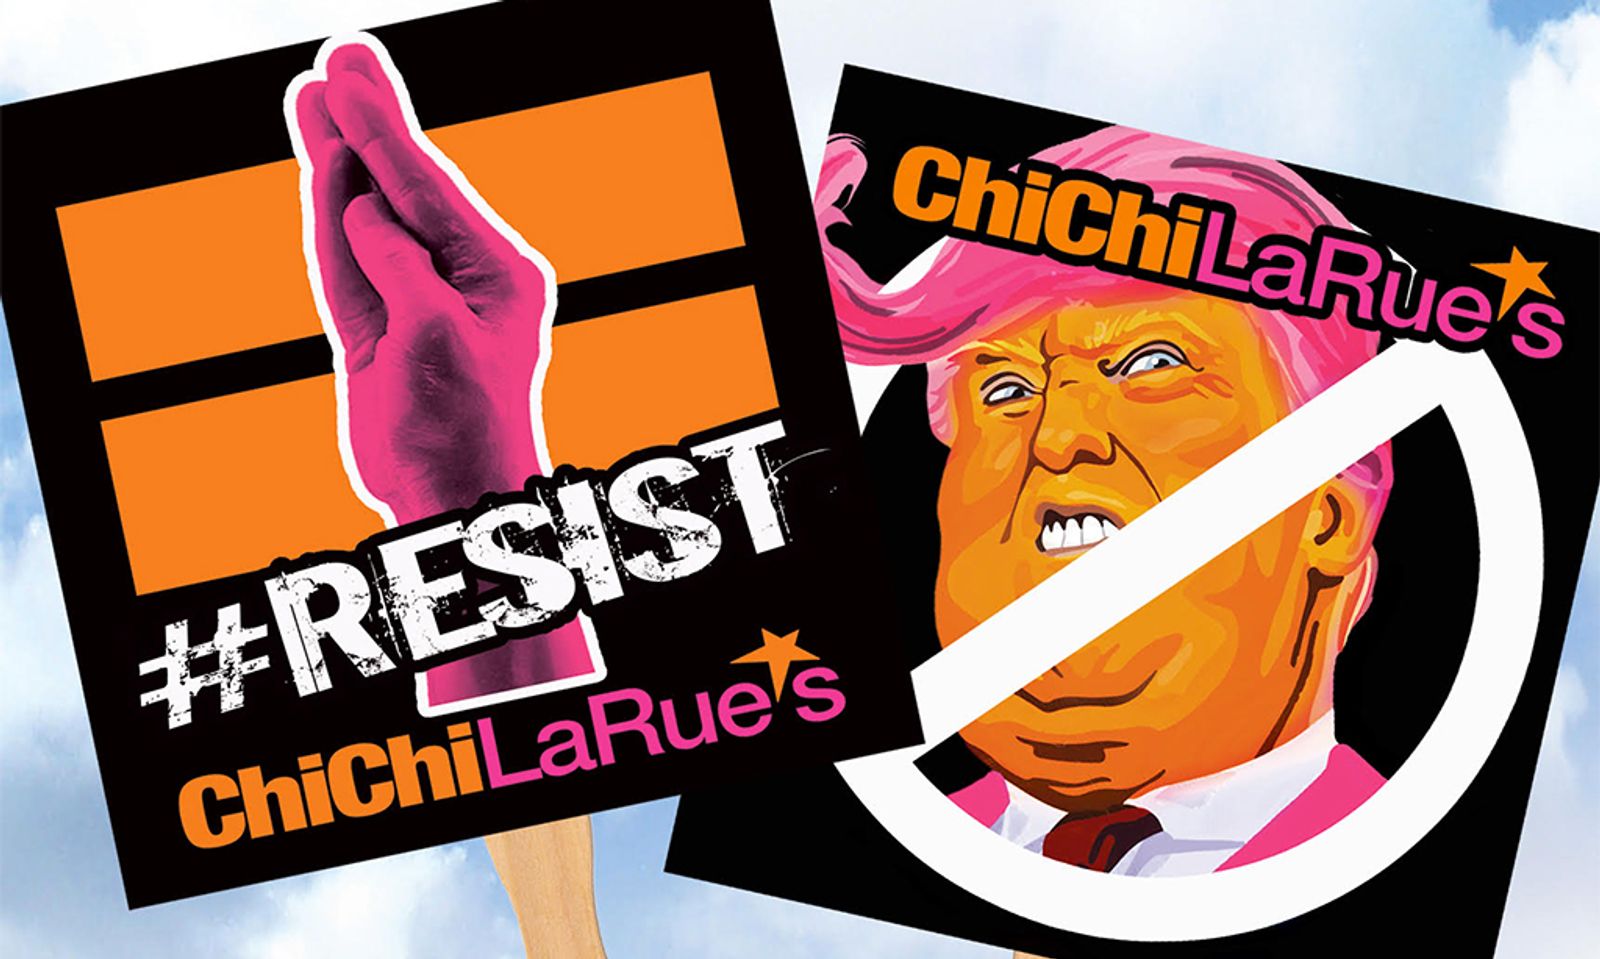 Adult Retailer Chi Chi La Rue’s Giving Away #Resist Signs